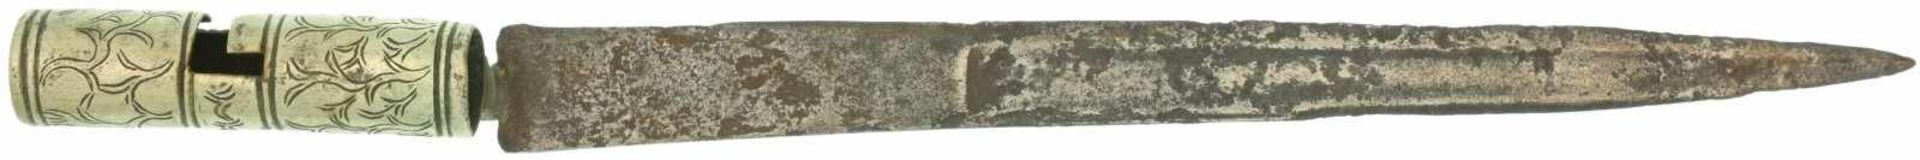 Tüllenbajonett, jagdlich, 18. Jahrhundert KL 320mm, TL 420mm, Klinge mit beidseitigem Hohlschliff,